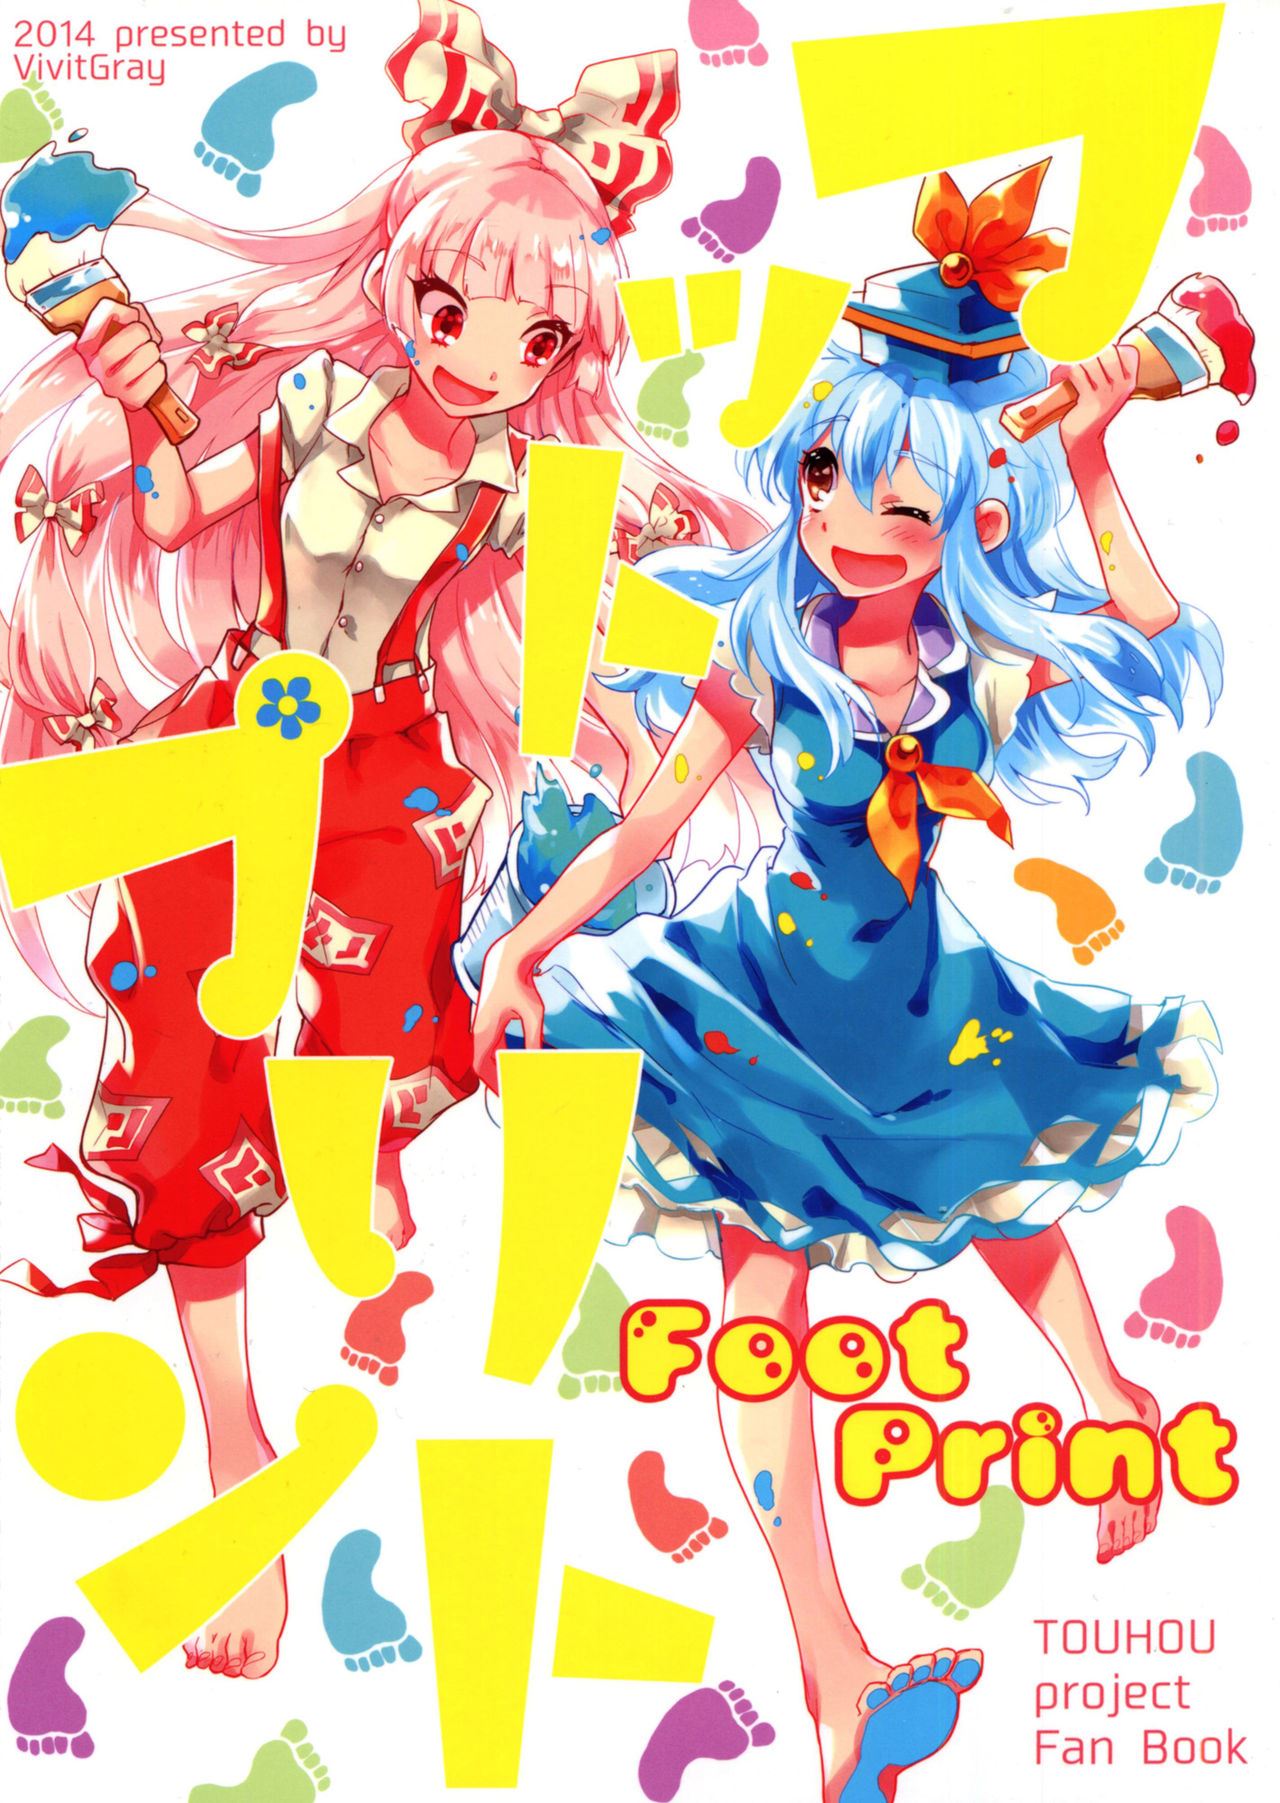 C86 Vivit Gray Shinoasa Foot Print Touhou Project English Gaku Touhou 00